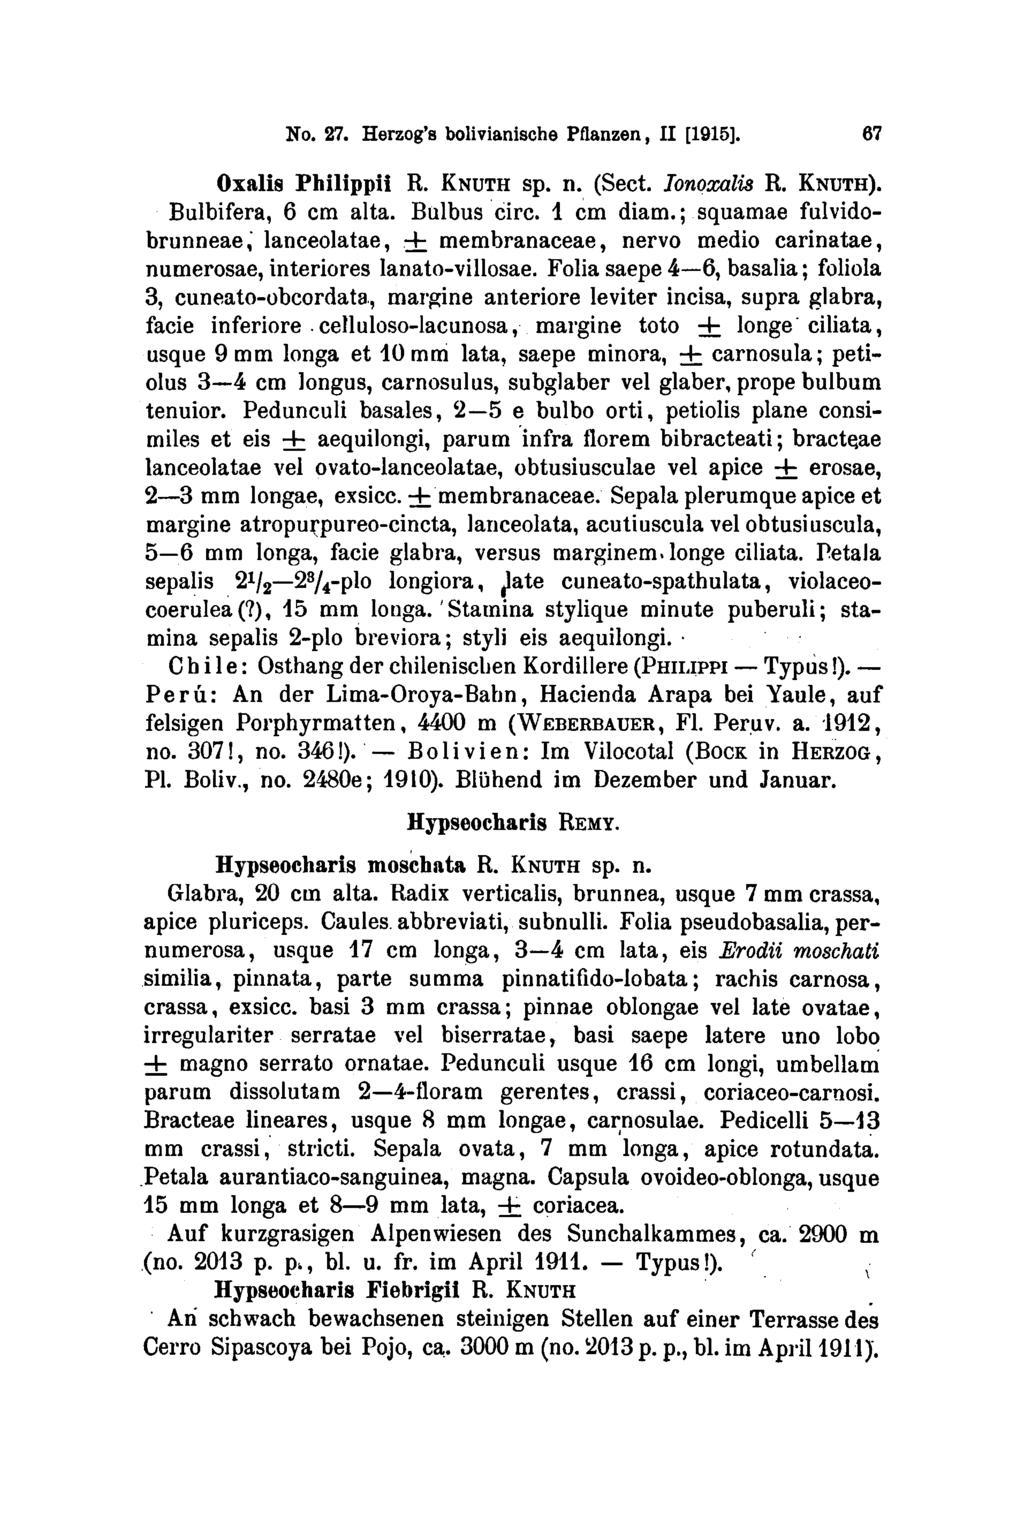 Bolivien: Typus!). No. 27. Herzog's bolivianische Pflanzen, II [1915], 67 Oxalis Philippii R. KNUTH sp. n. (Sect. Ionoxalis R. KNUTH). Bulbifera, 6 cm alta. Bulbus circ. 1 cm diam.